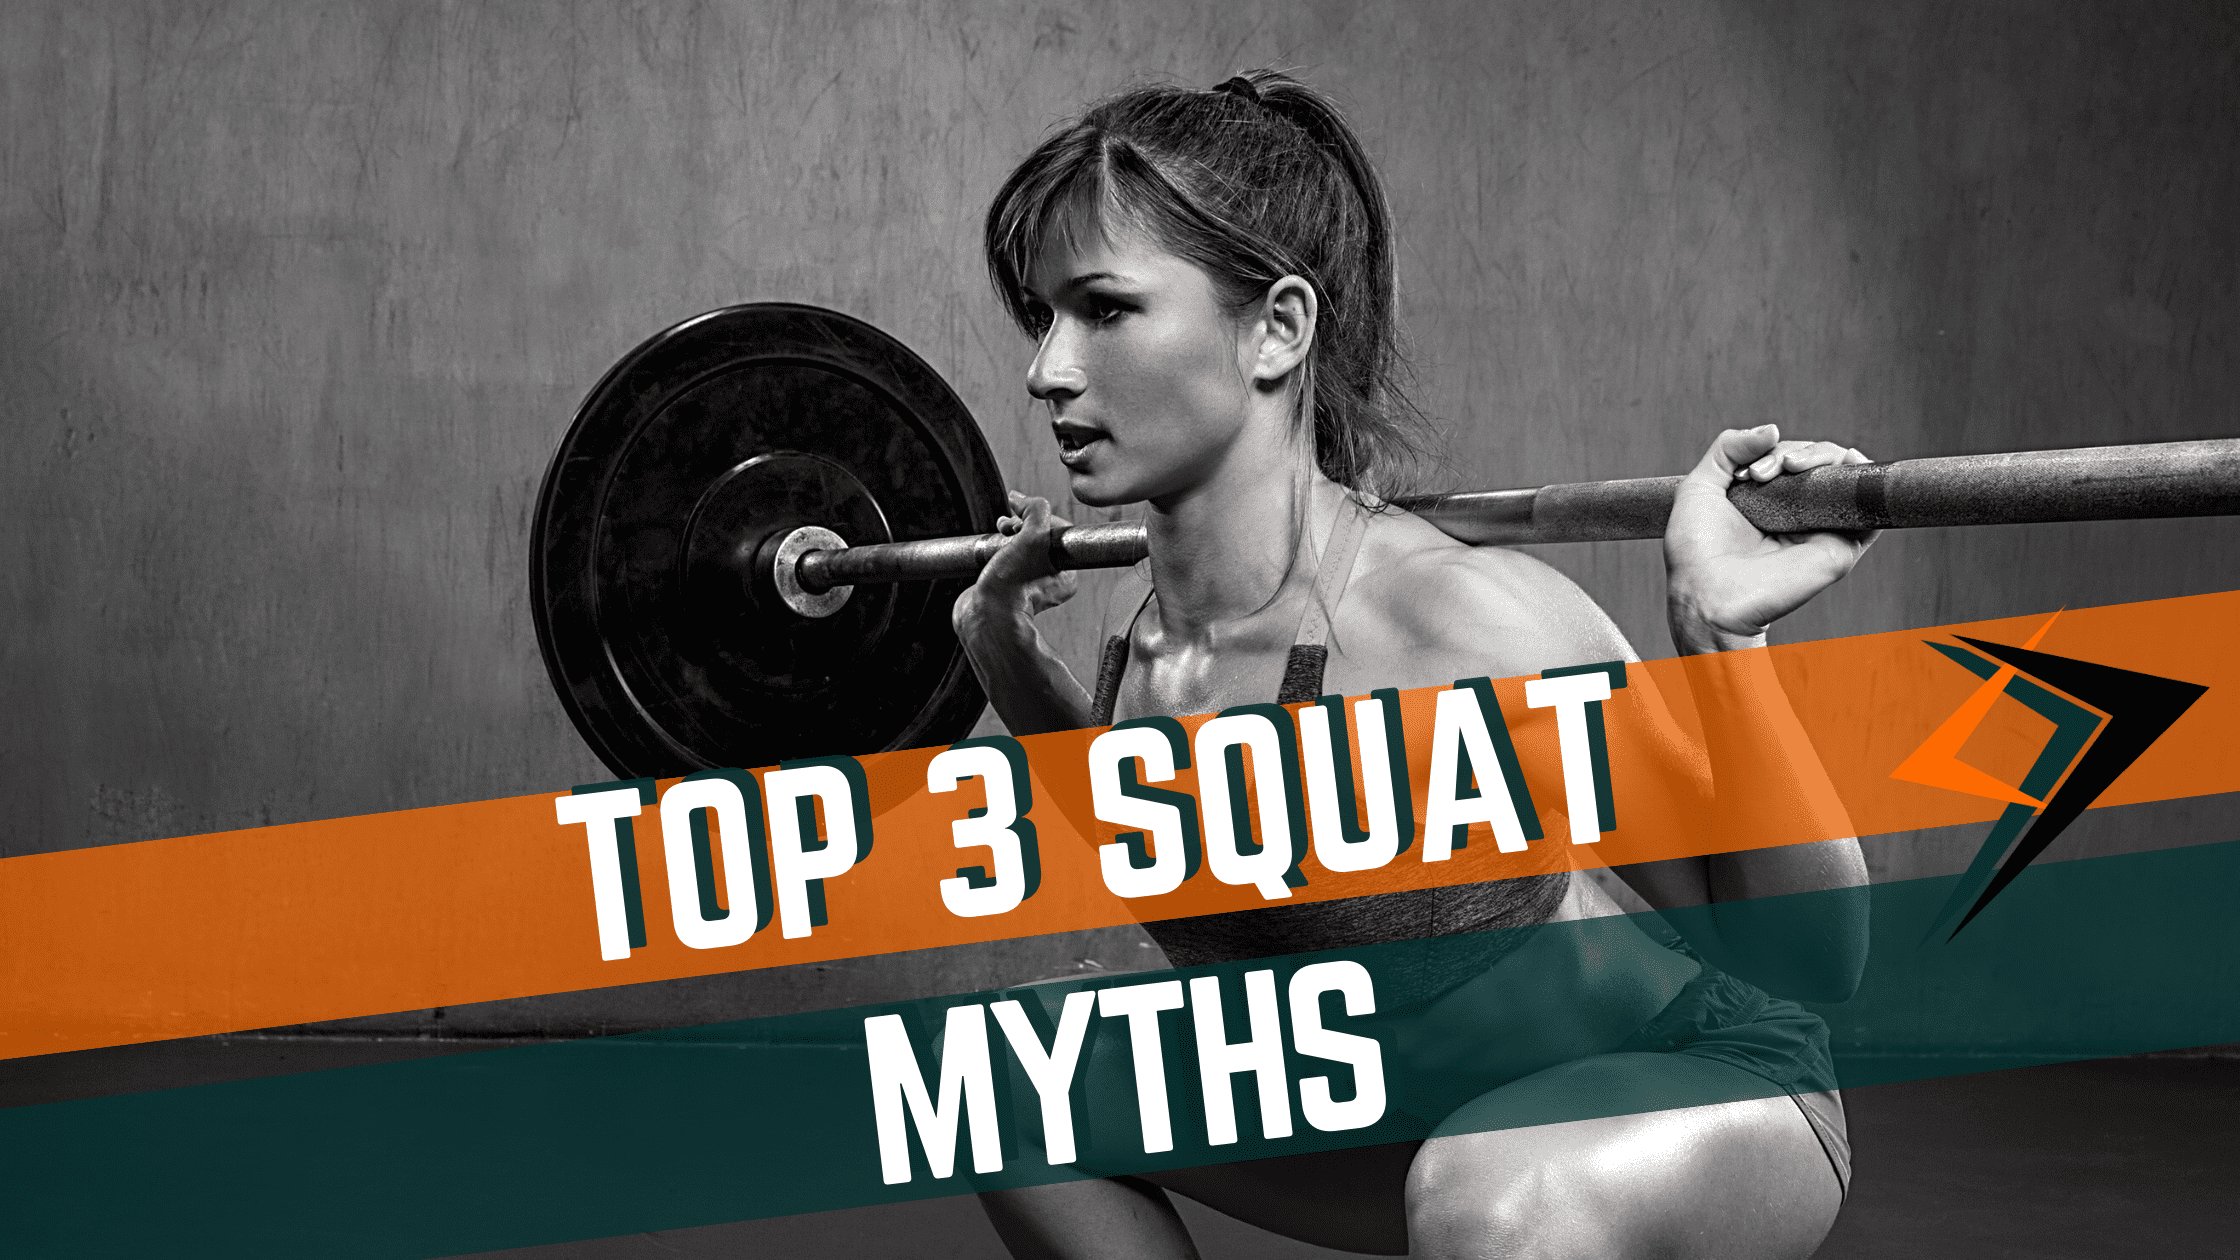 Top 3 Squat Myths Debunked